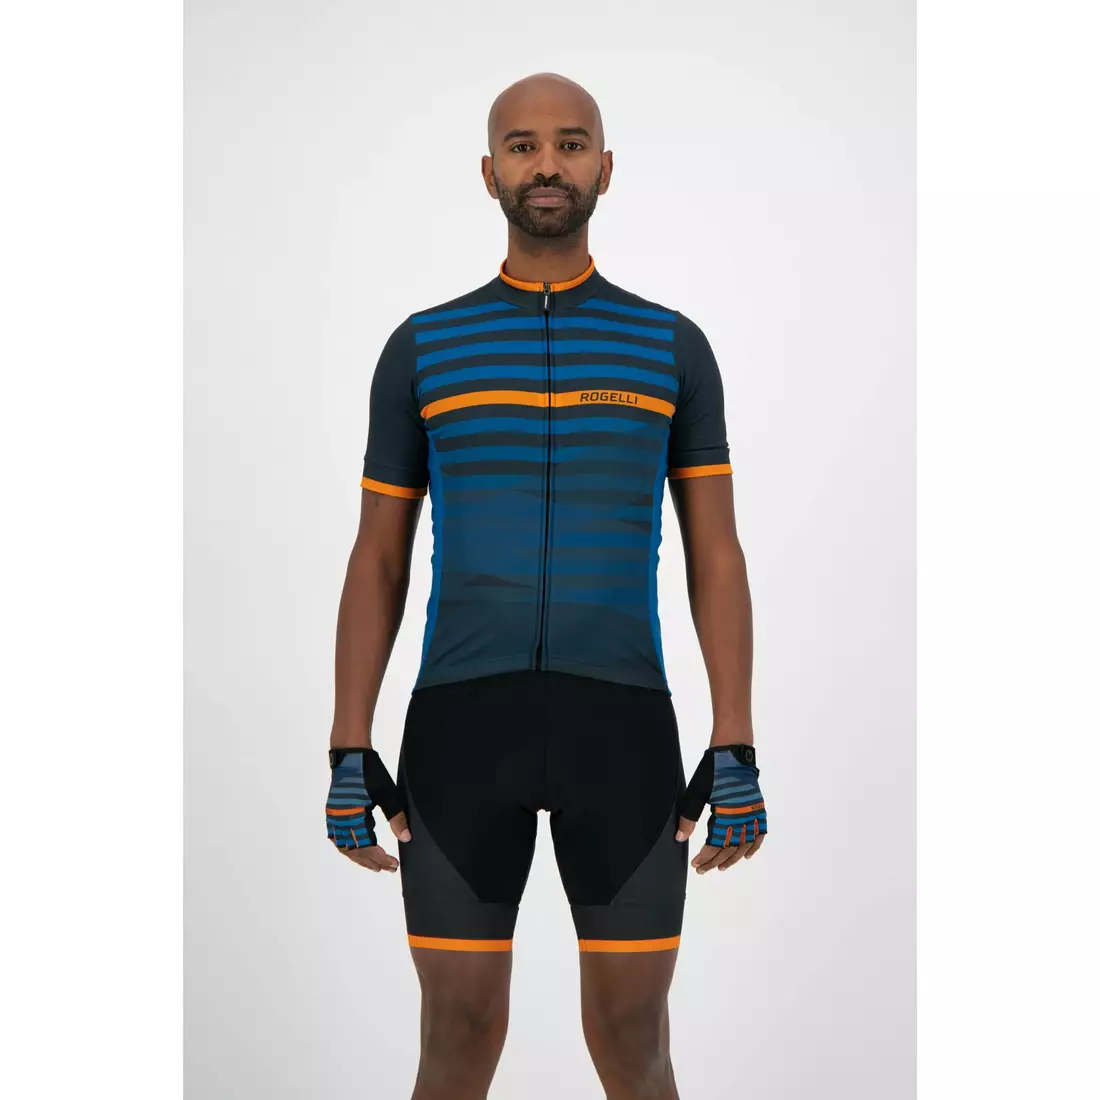 ROGELLI pánske tričko na bicykel STRIPE blue/orange 001.102